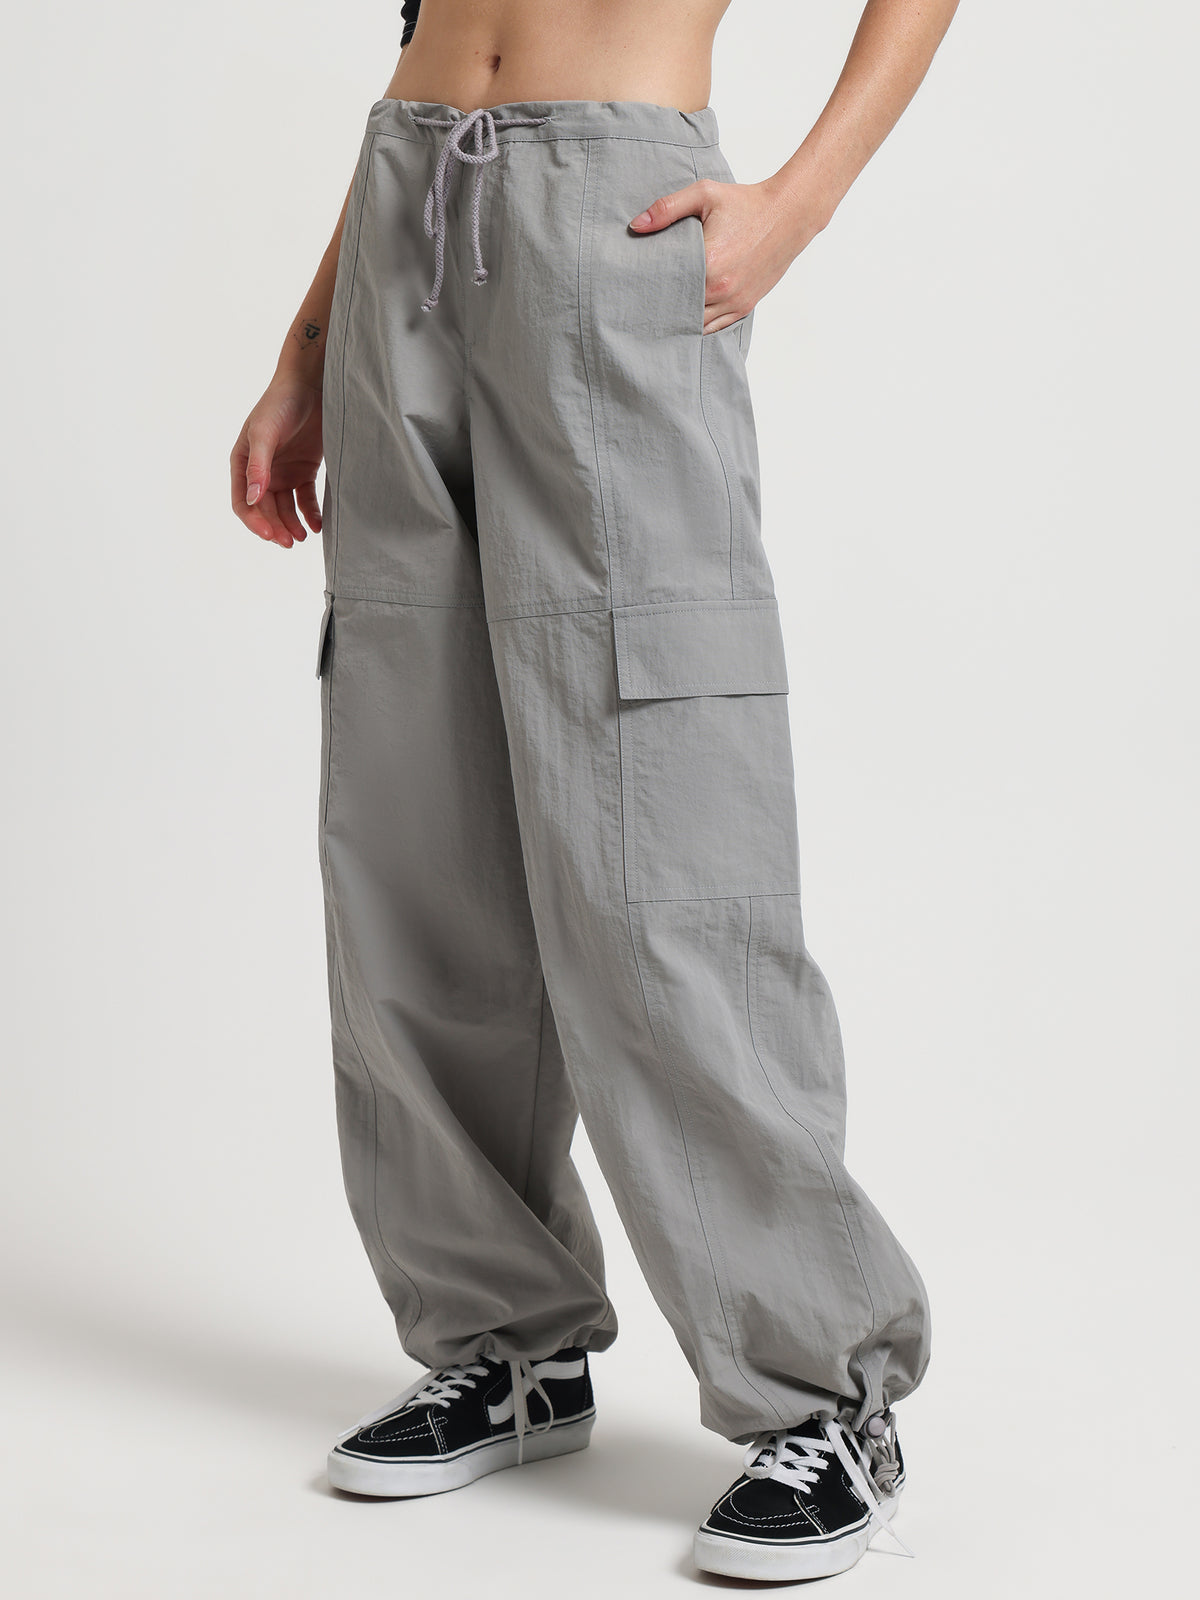 Parachute Cargo Pants in Grey